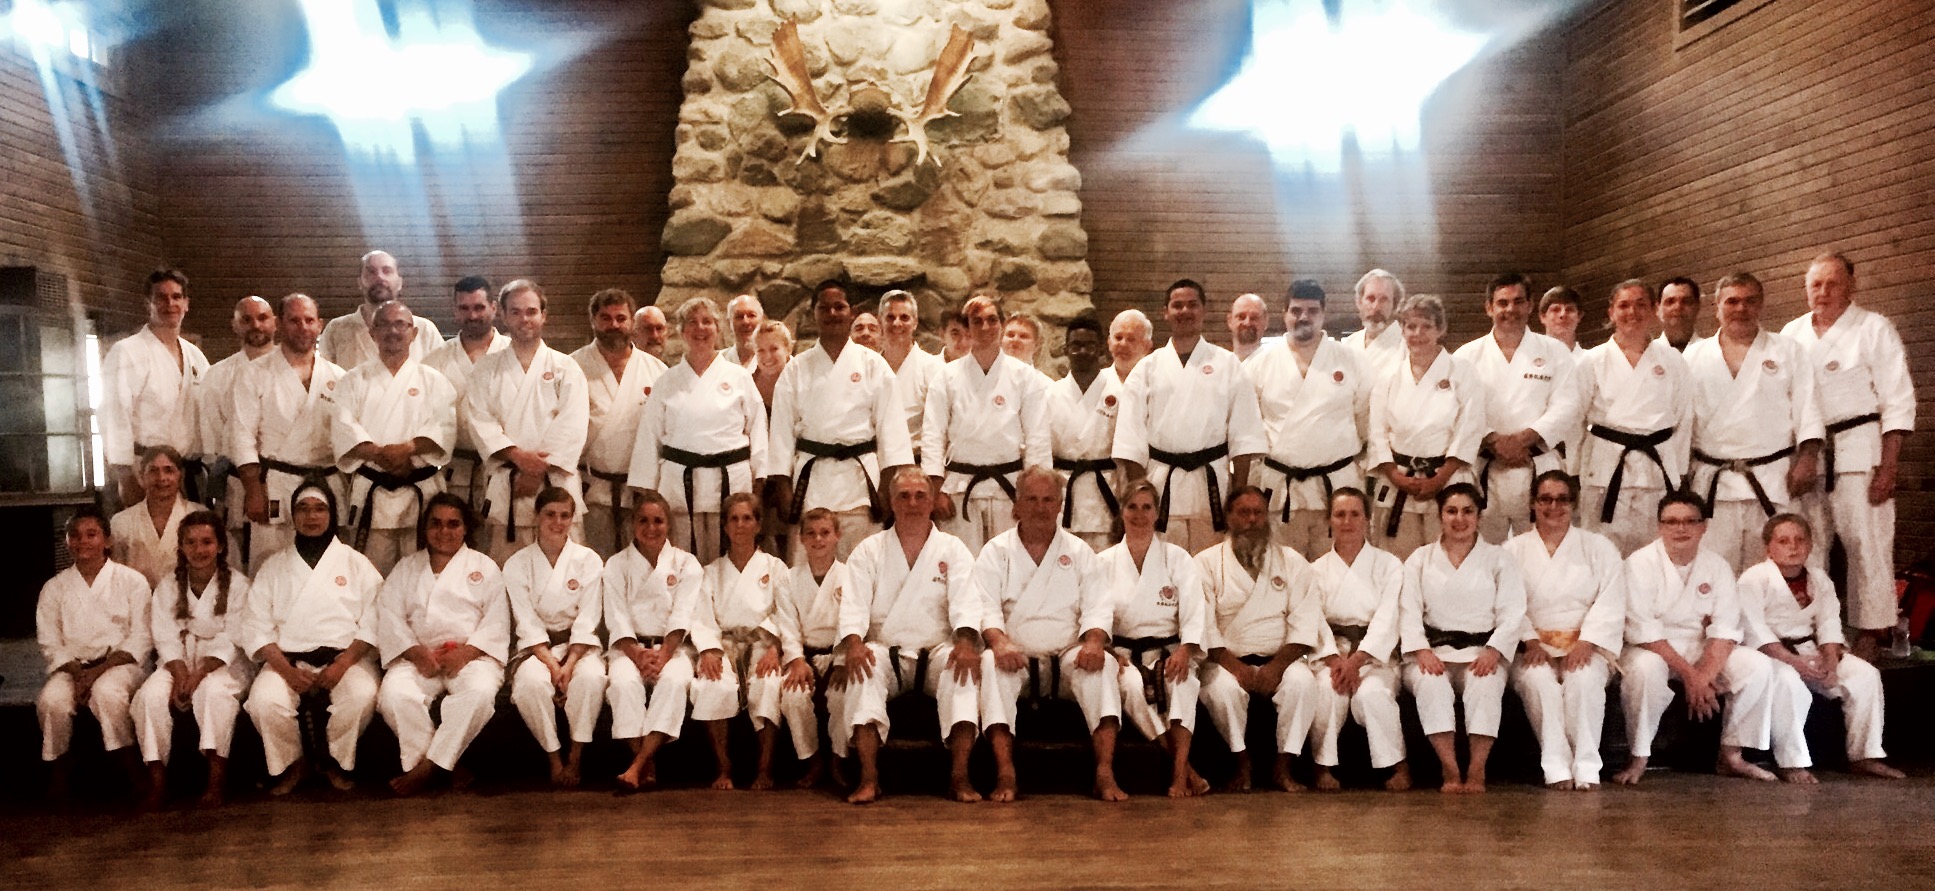 JKA Chicago karate school team - Japan Karate Association of Chicago